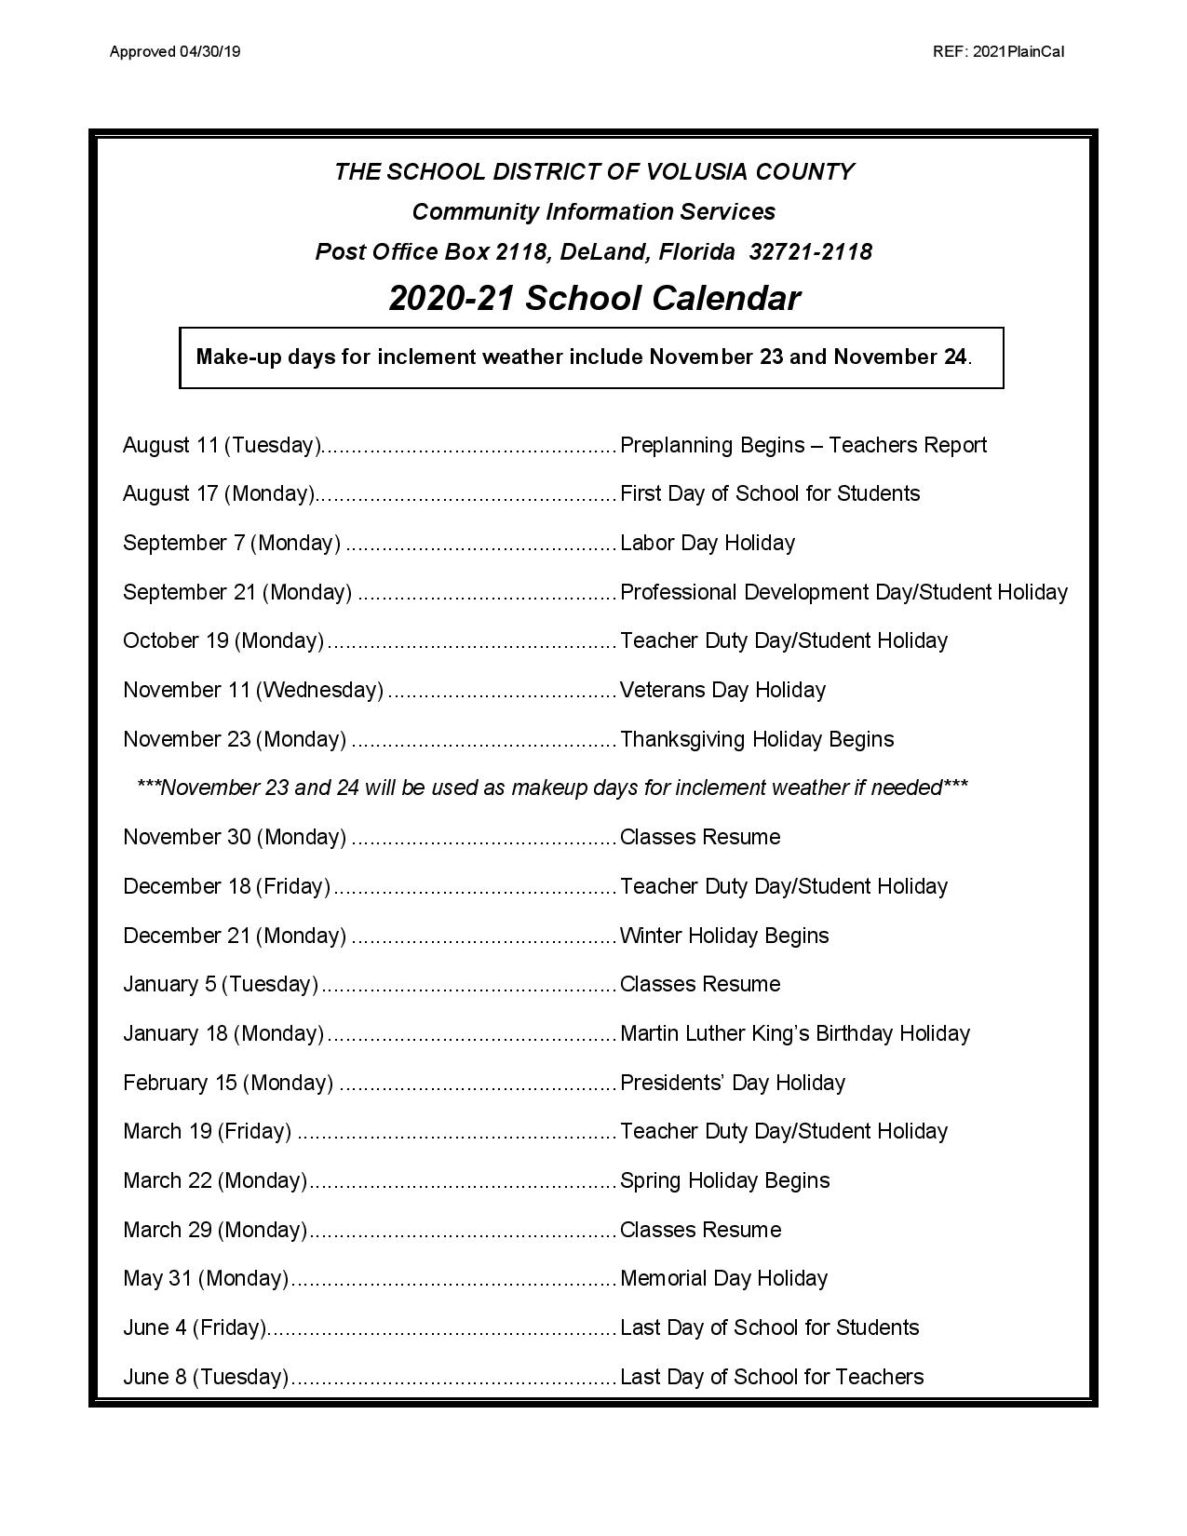 Volusia County Schools Calendar 20202021 in PDF